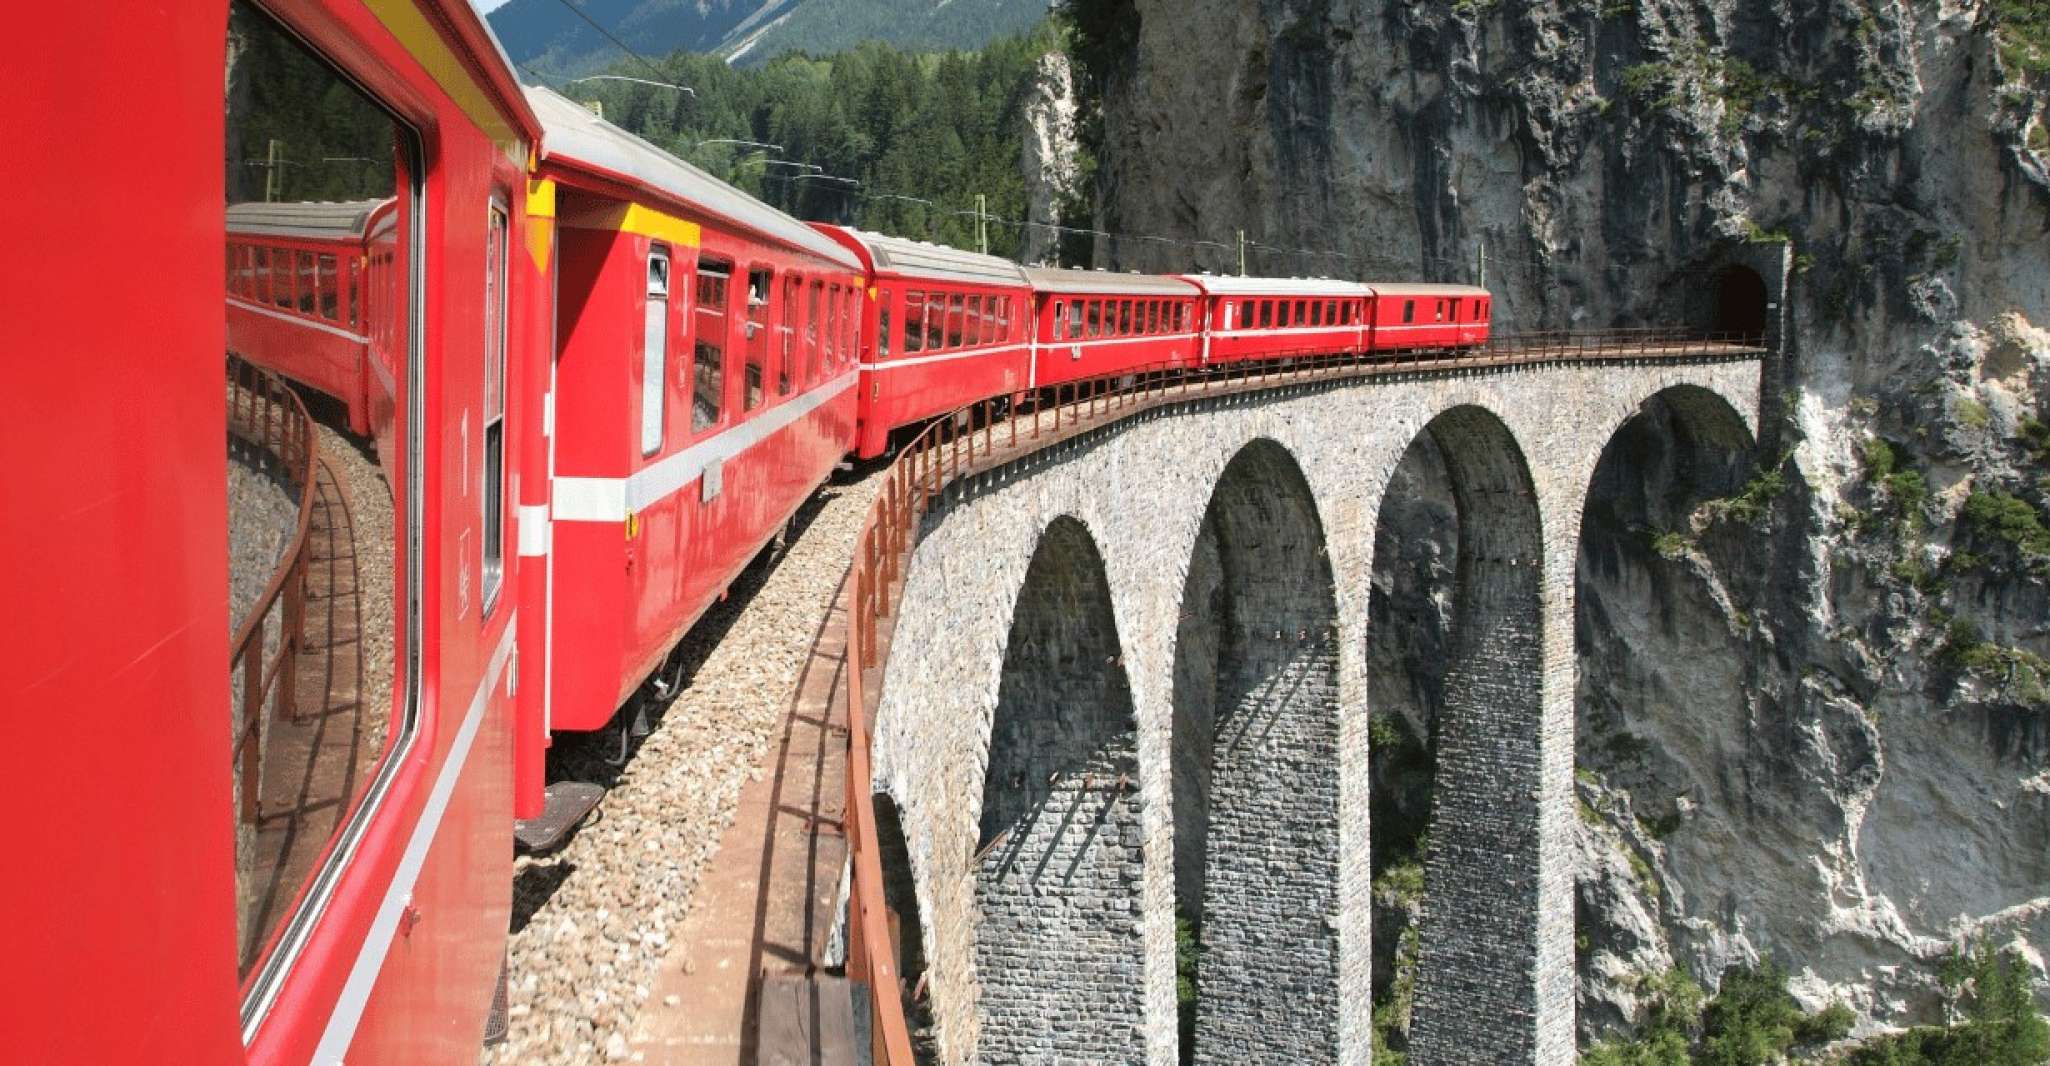 From Colico railway station, Bernina train ticket - Housity